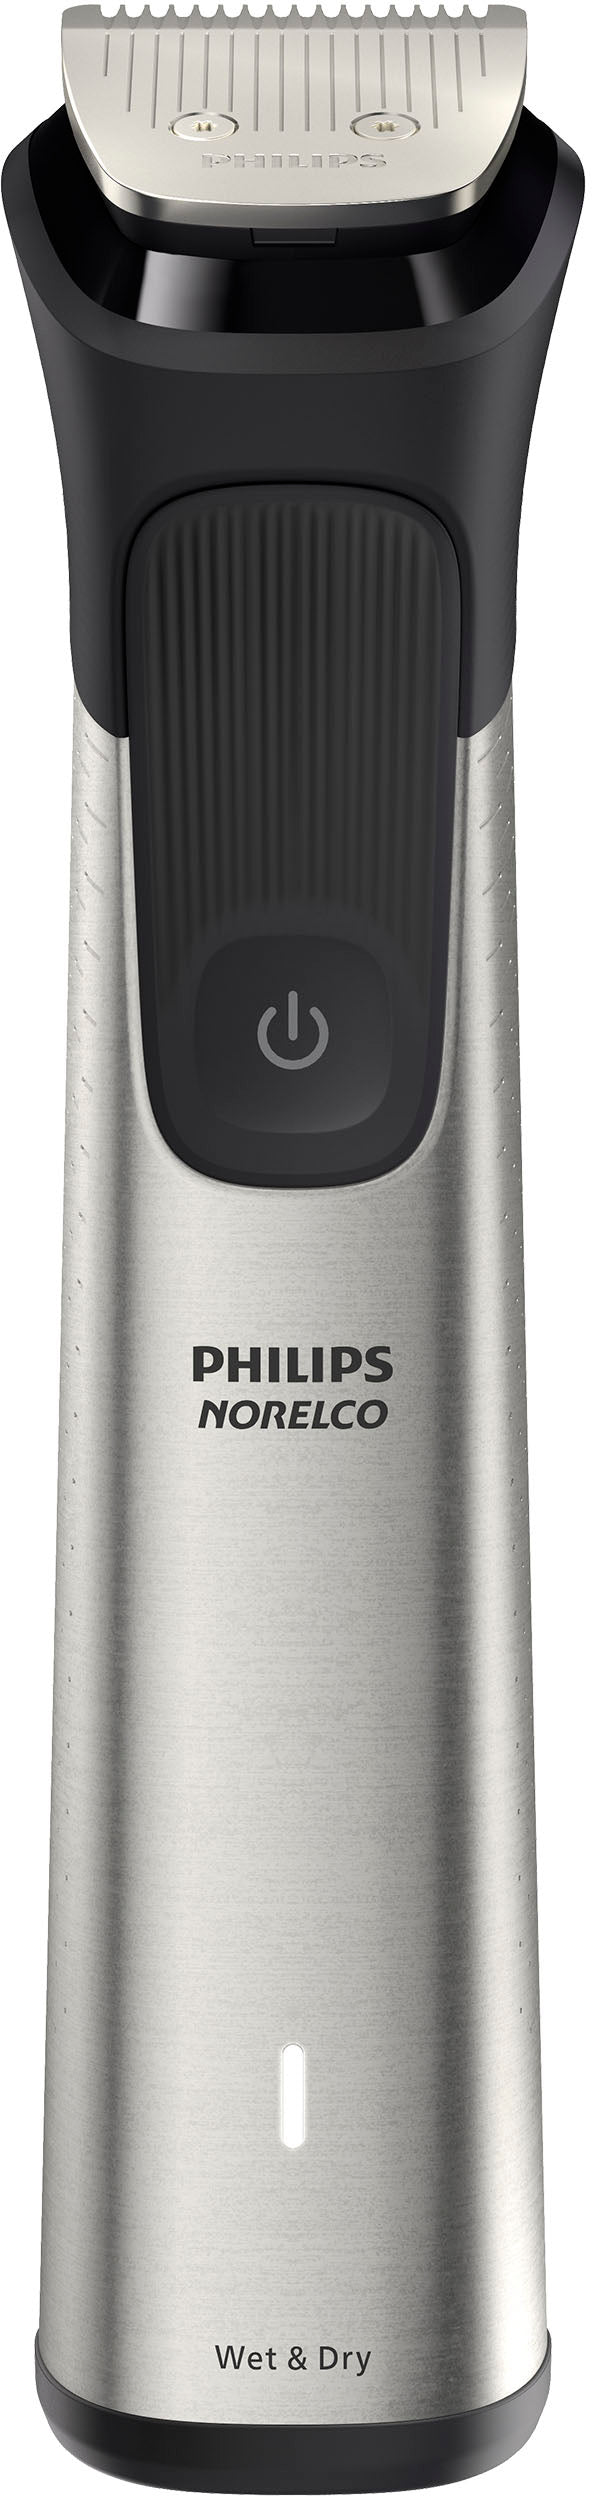 Philips Norelco Multigroom MG9510/60 - Silver_2